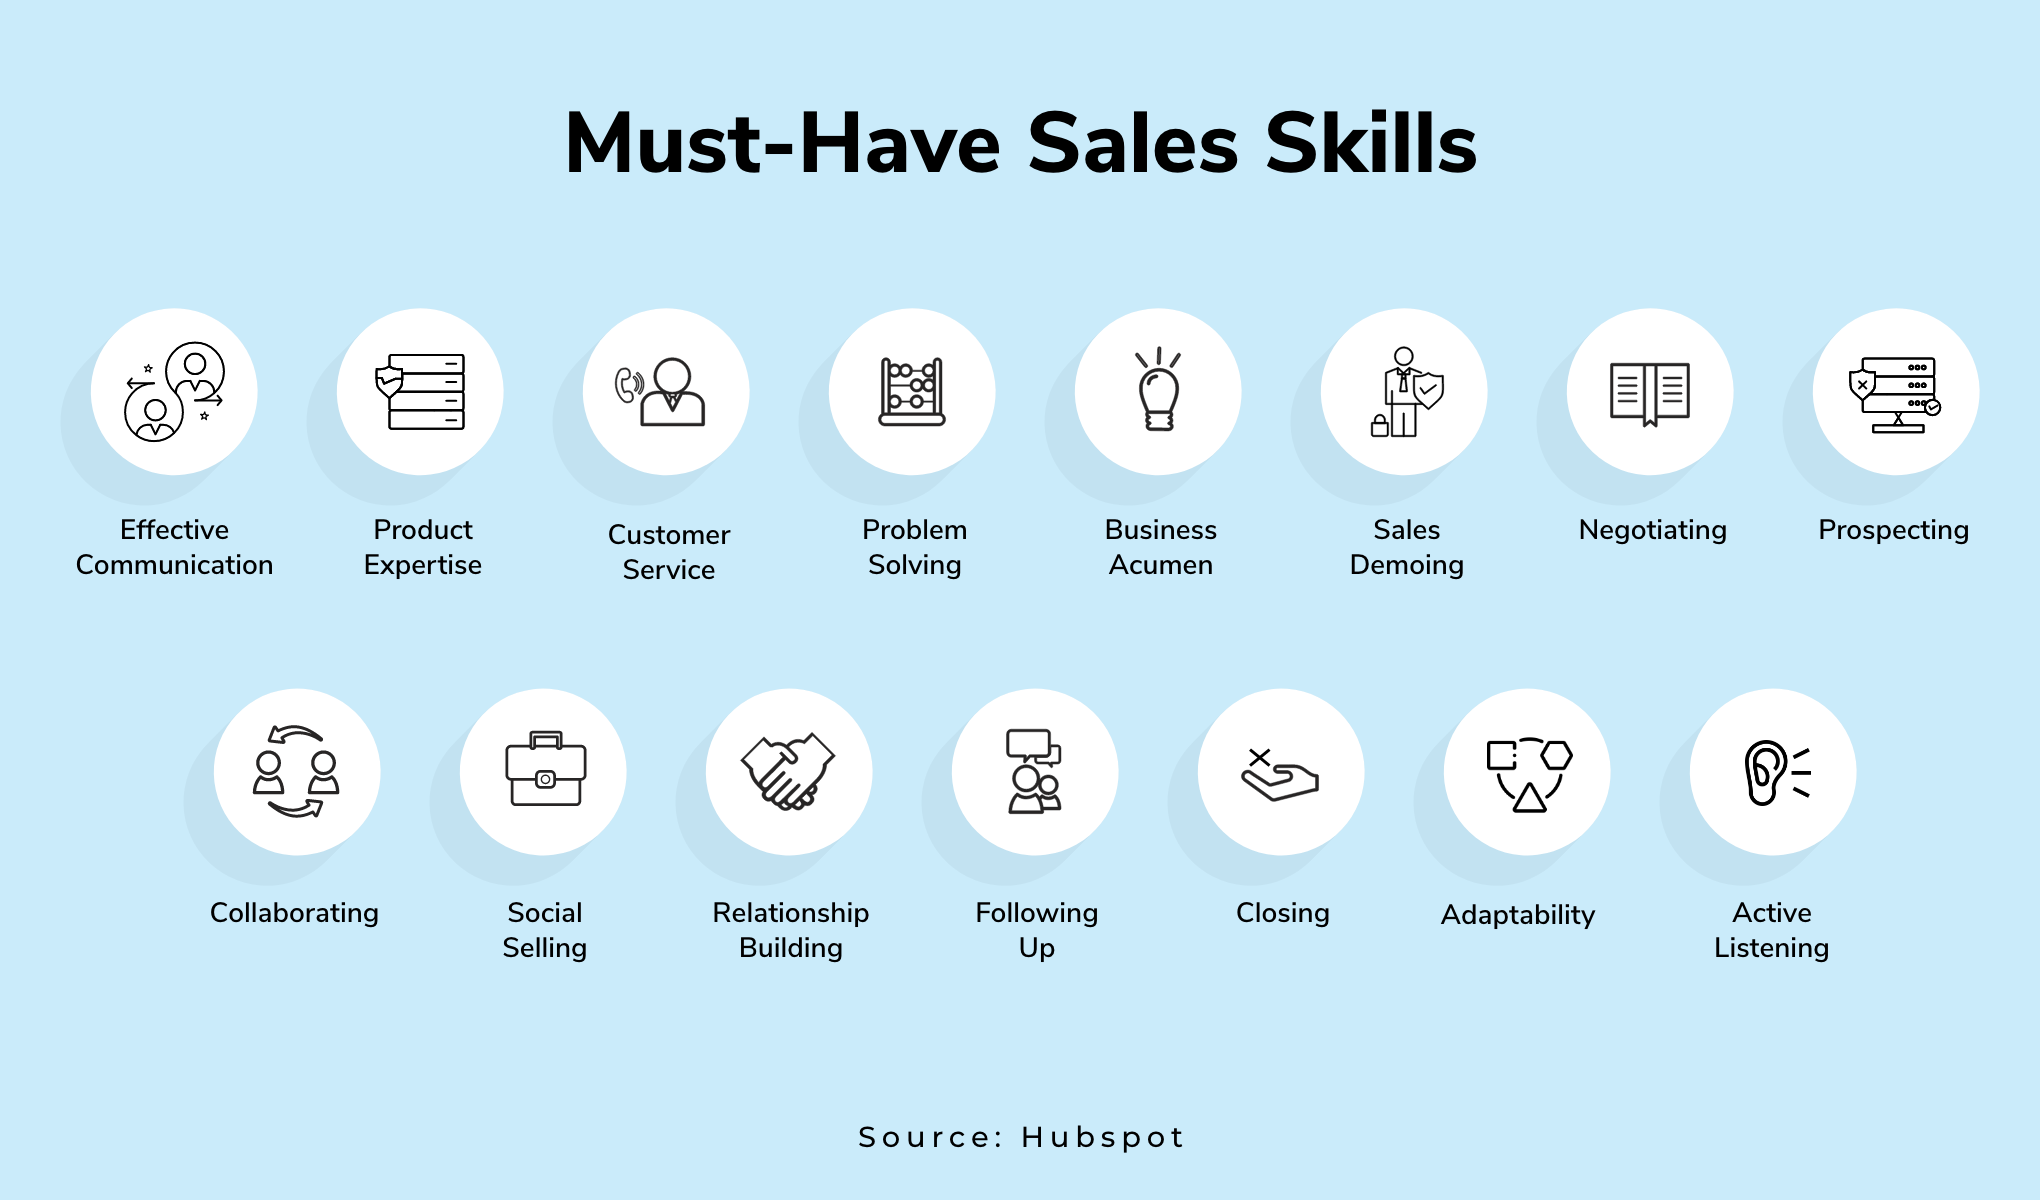 
key skills for a salesperson